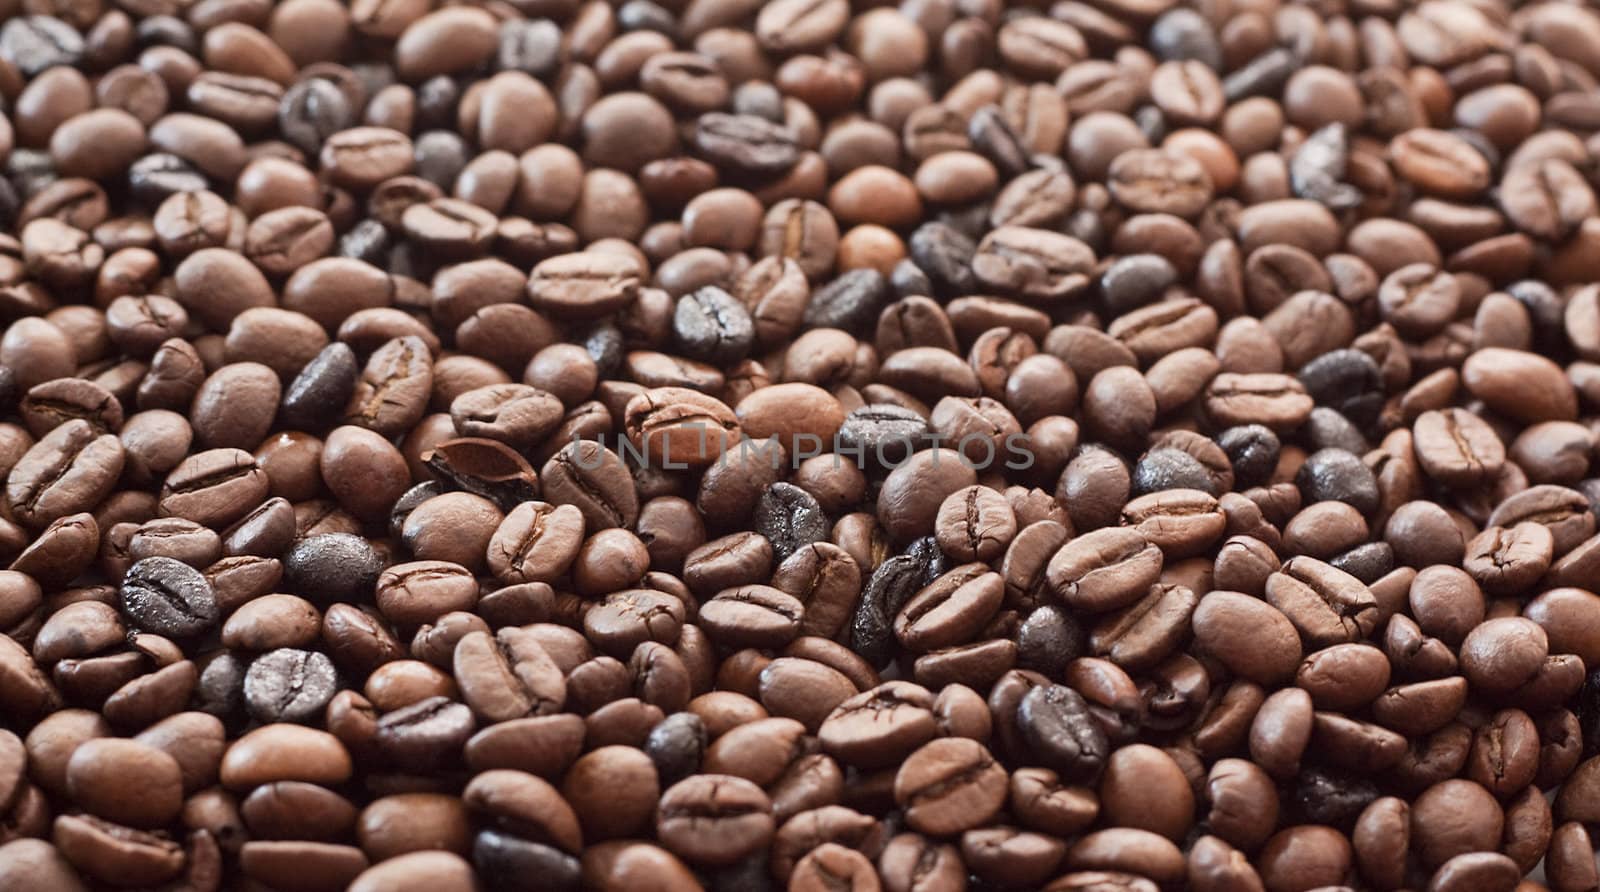 Roasted Coffee Beans by Brigida_Soriano